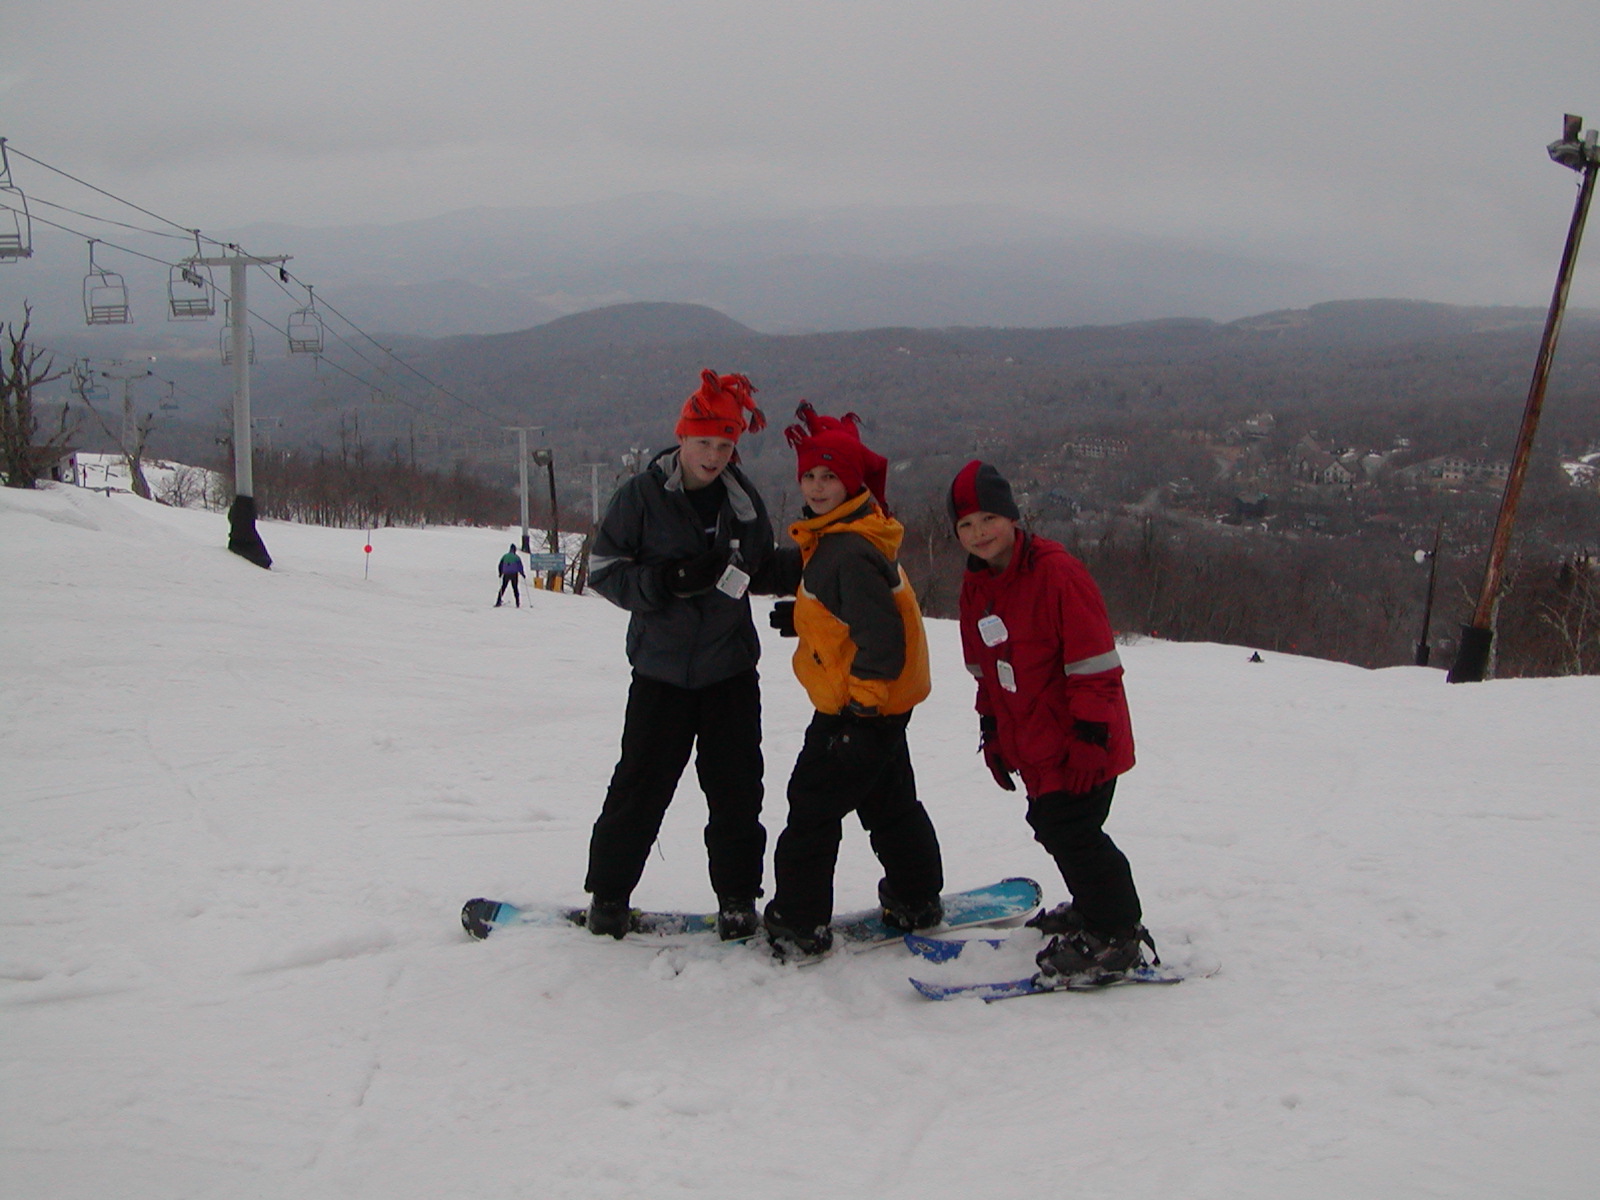 Brandan, Ian and Austin at Ski Beech in February 2003